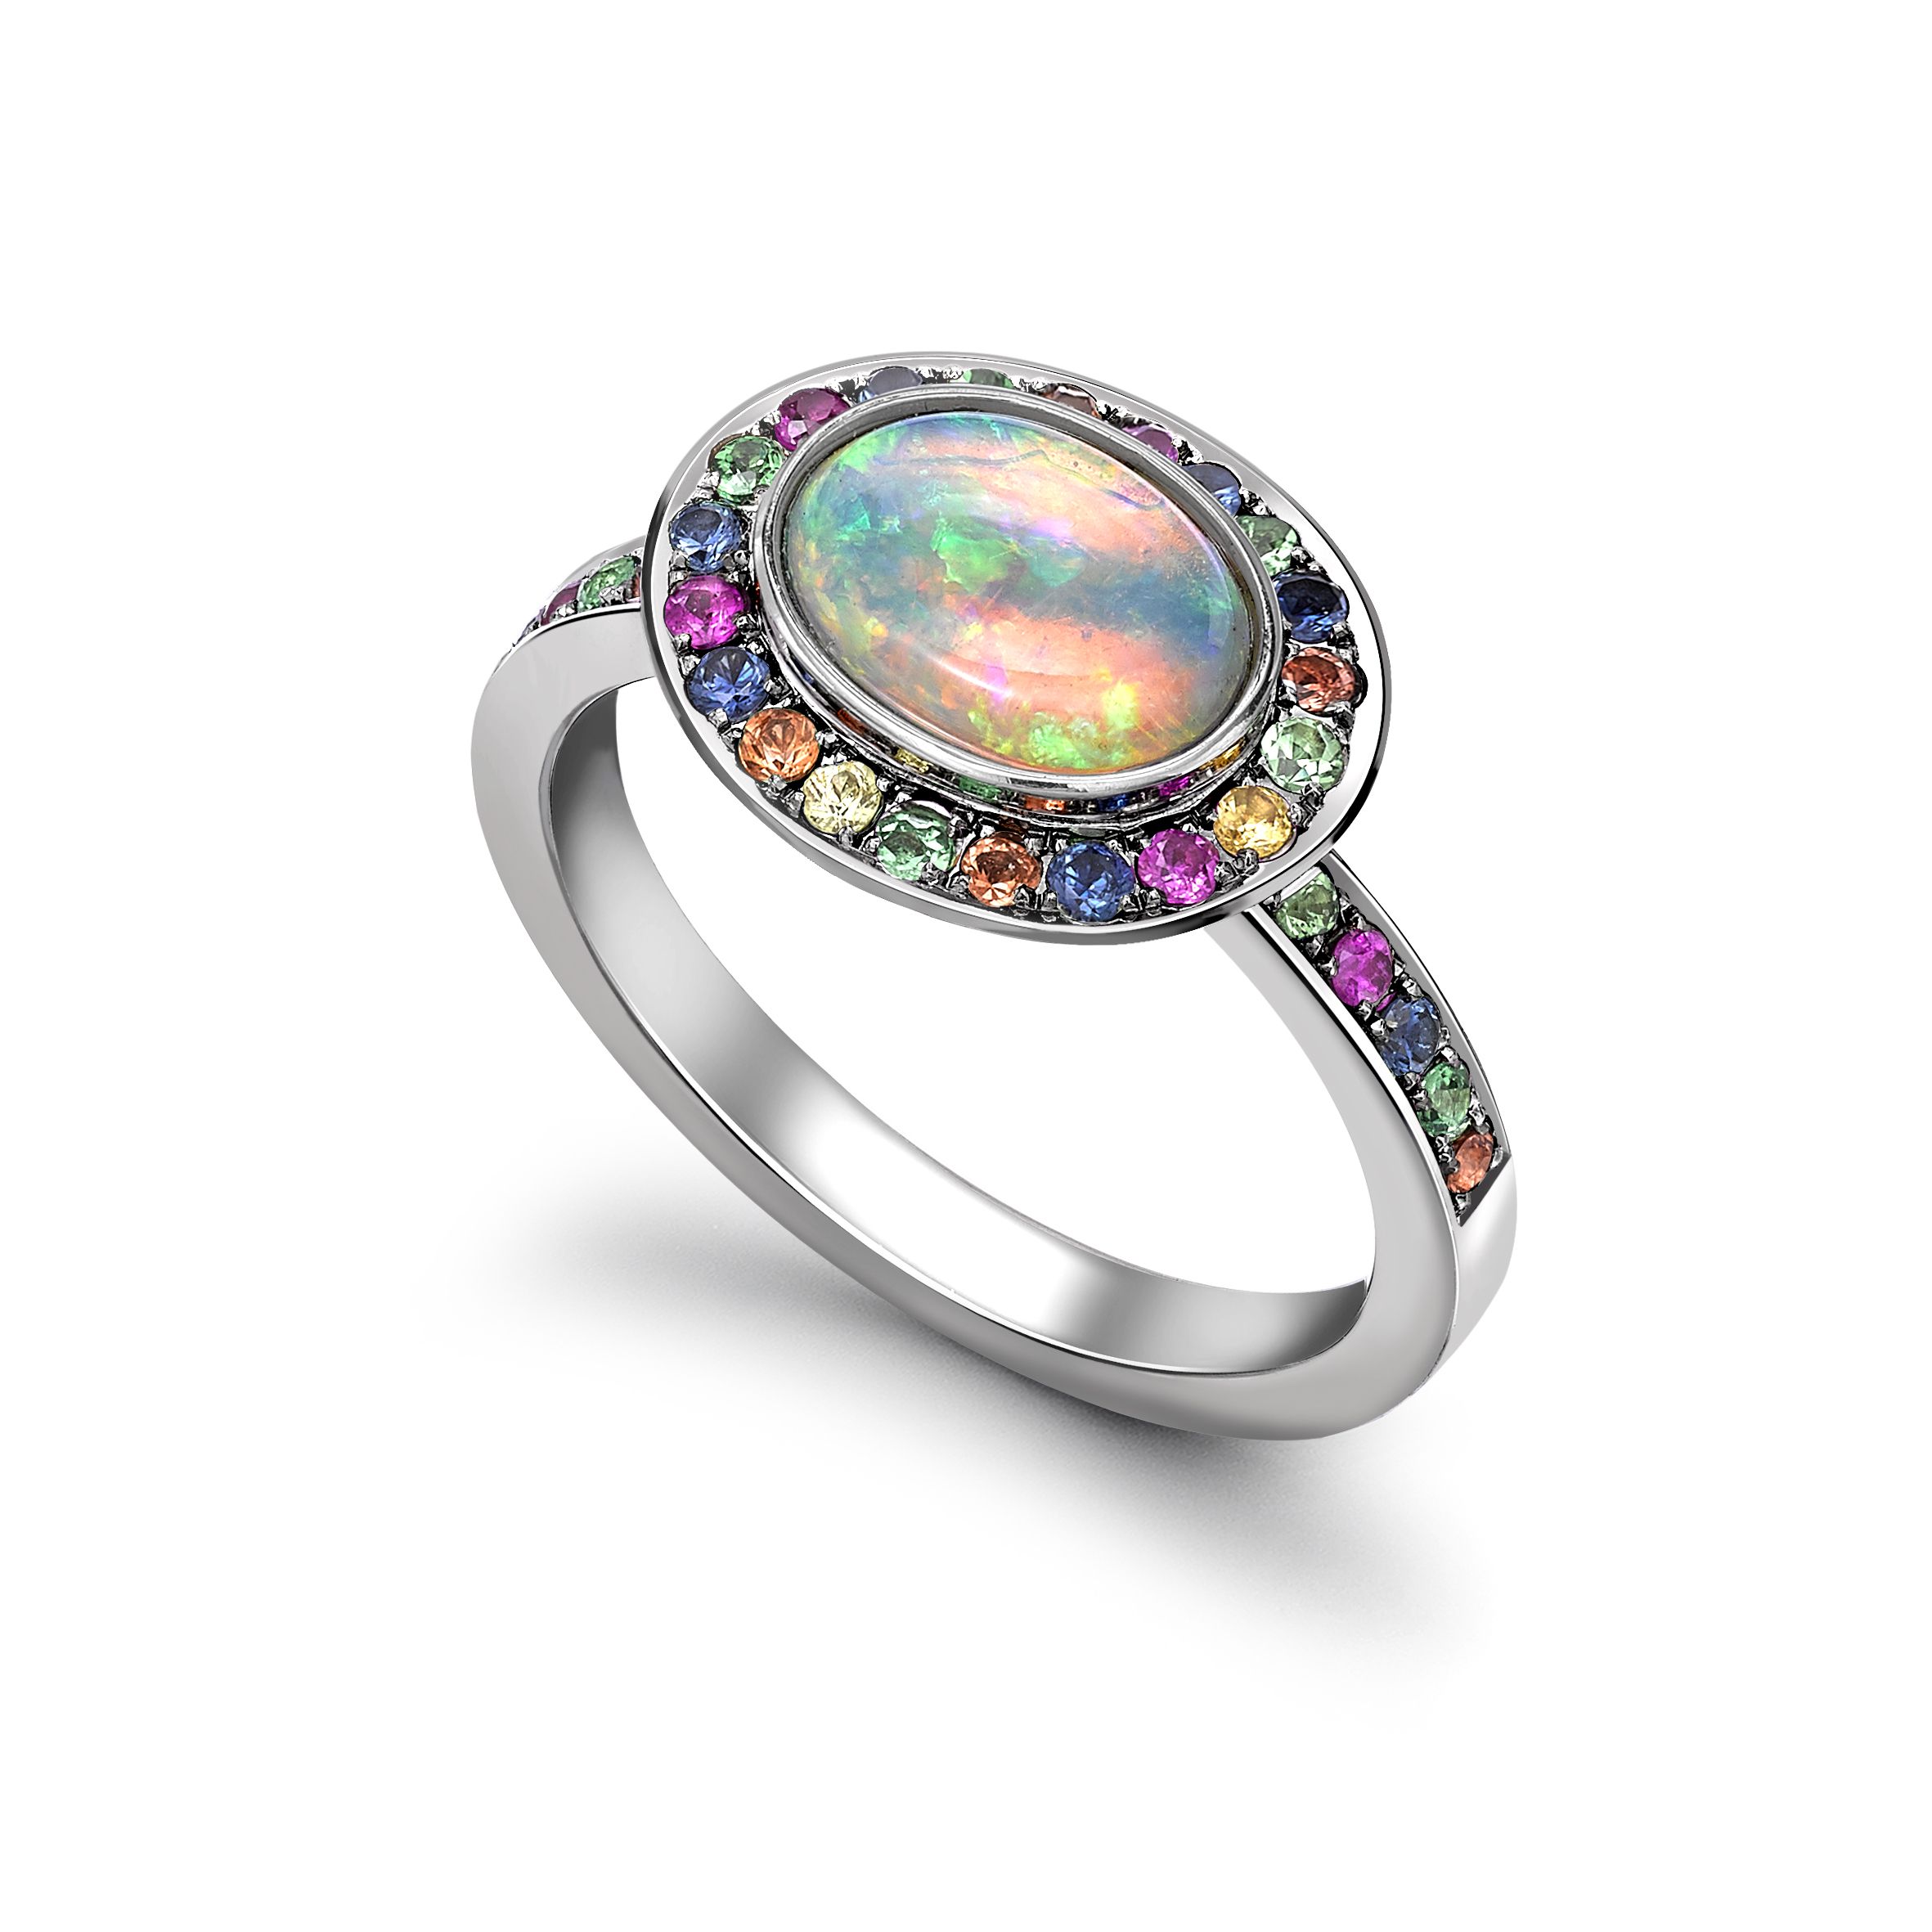 Behkiuoda Women Rings Jewelry Opals Engagement Ring with Diamond Wedding Rings 